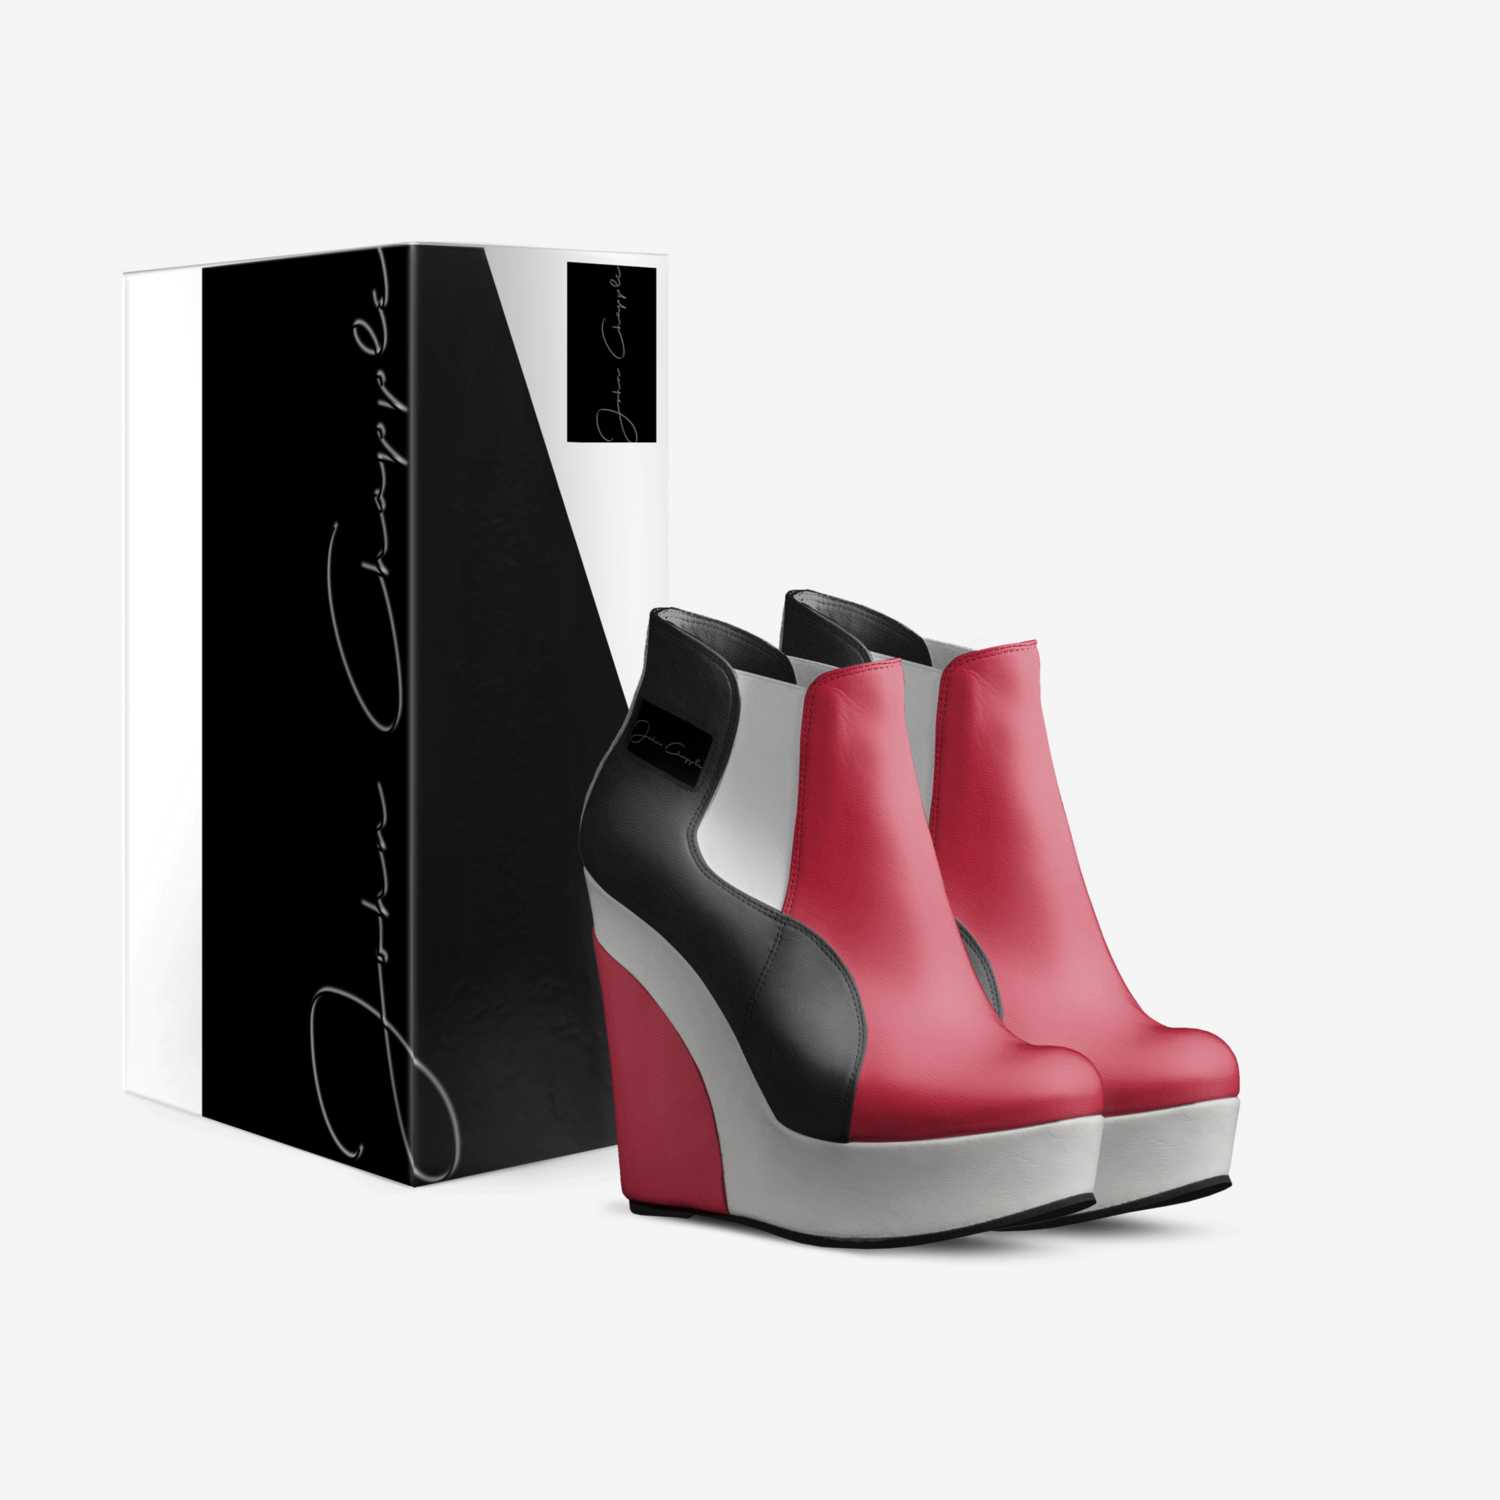 DRIPADICI custom made in Italy shoes by John Chapple | Box view